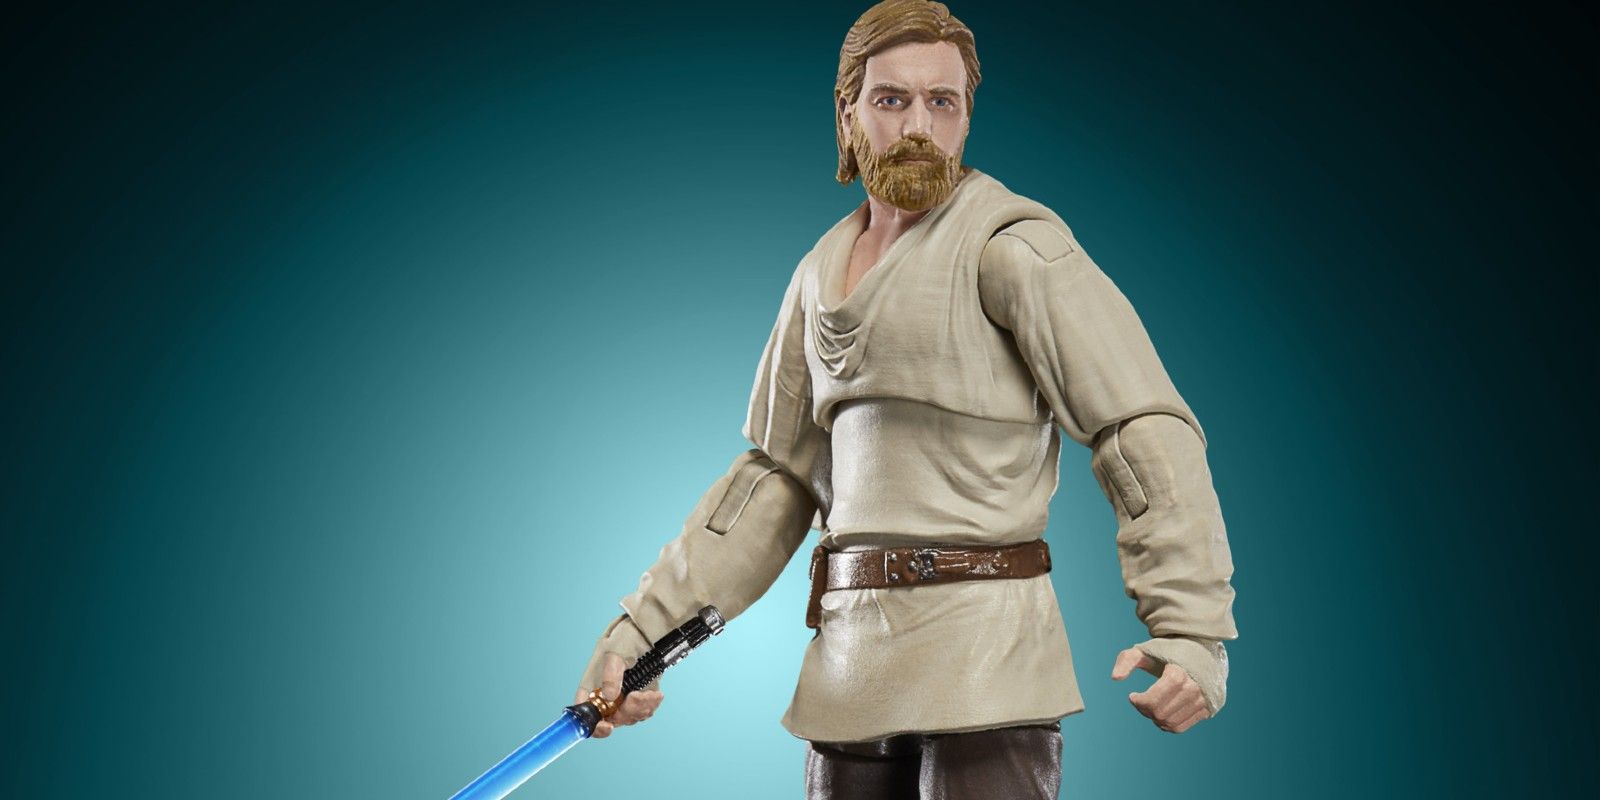 EXCLUSIVE: New Obi-Wan Kenobi Figure Based on Disney+ Series Revealed